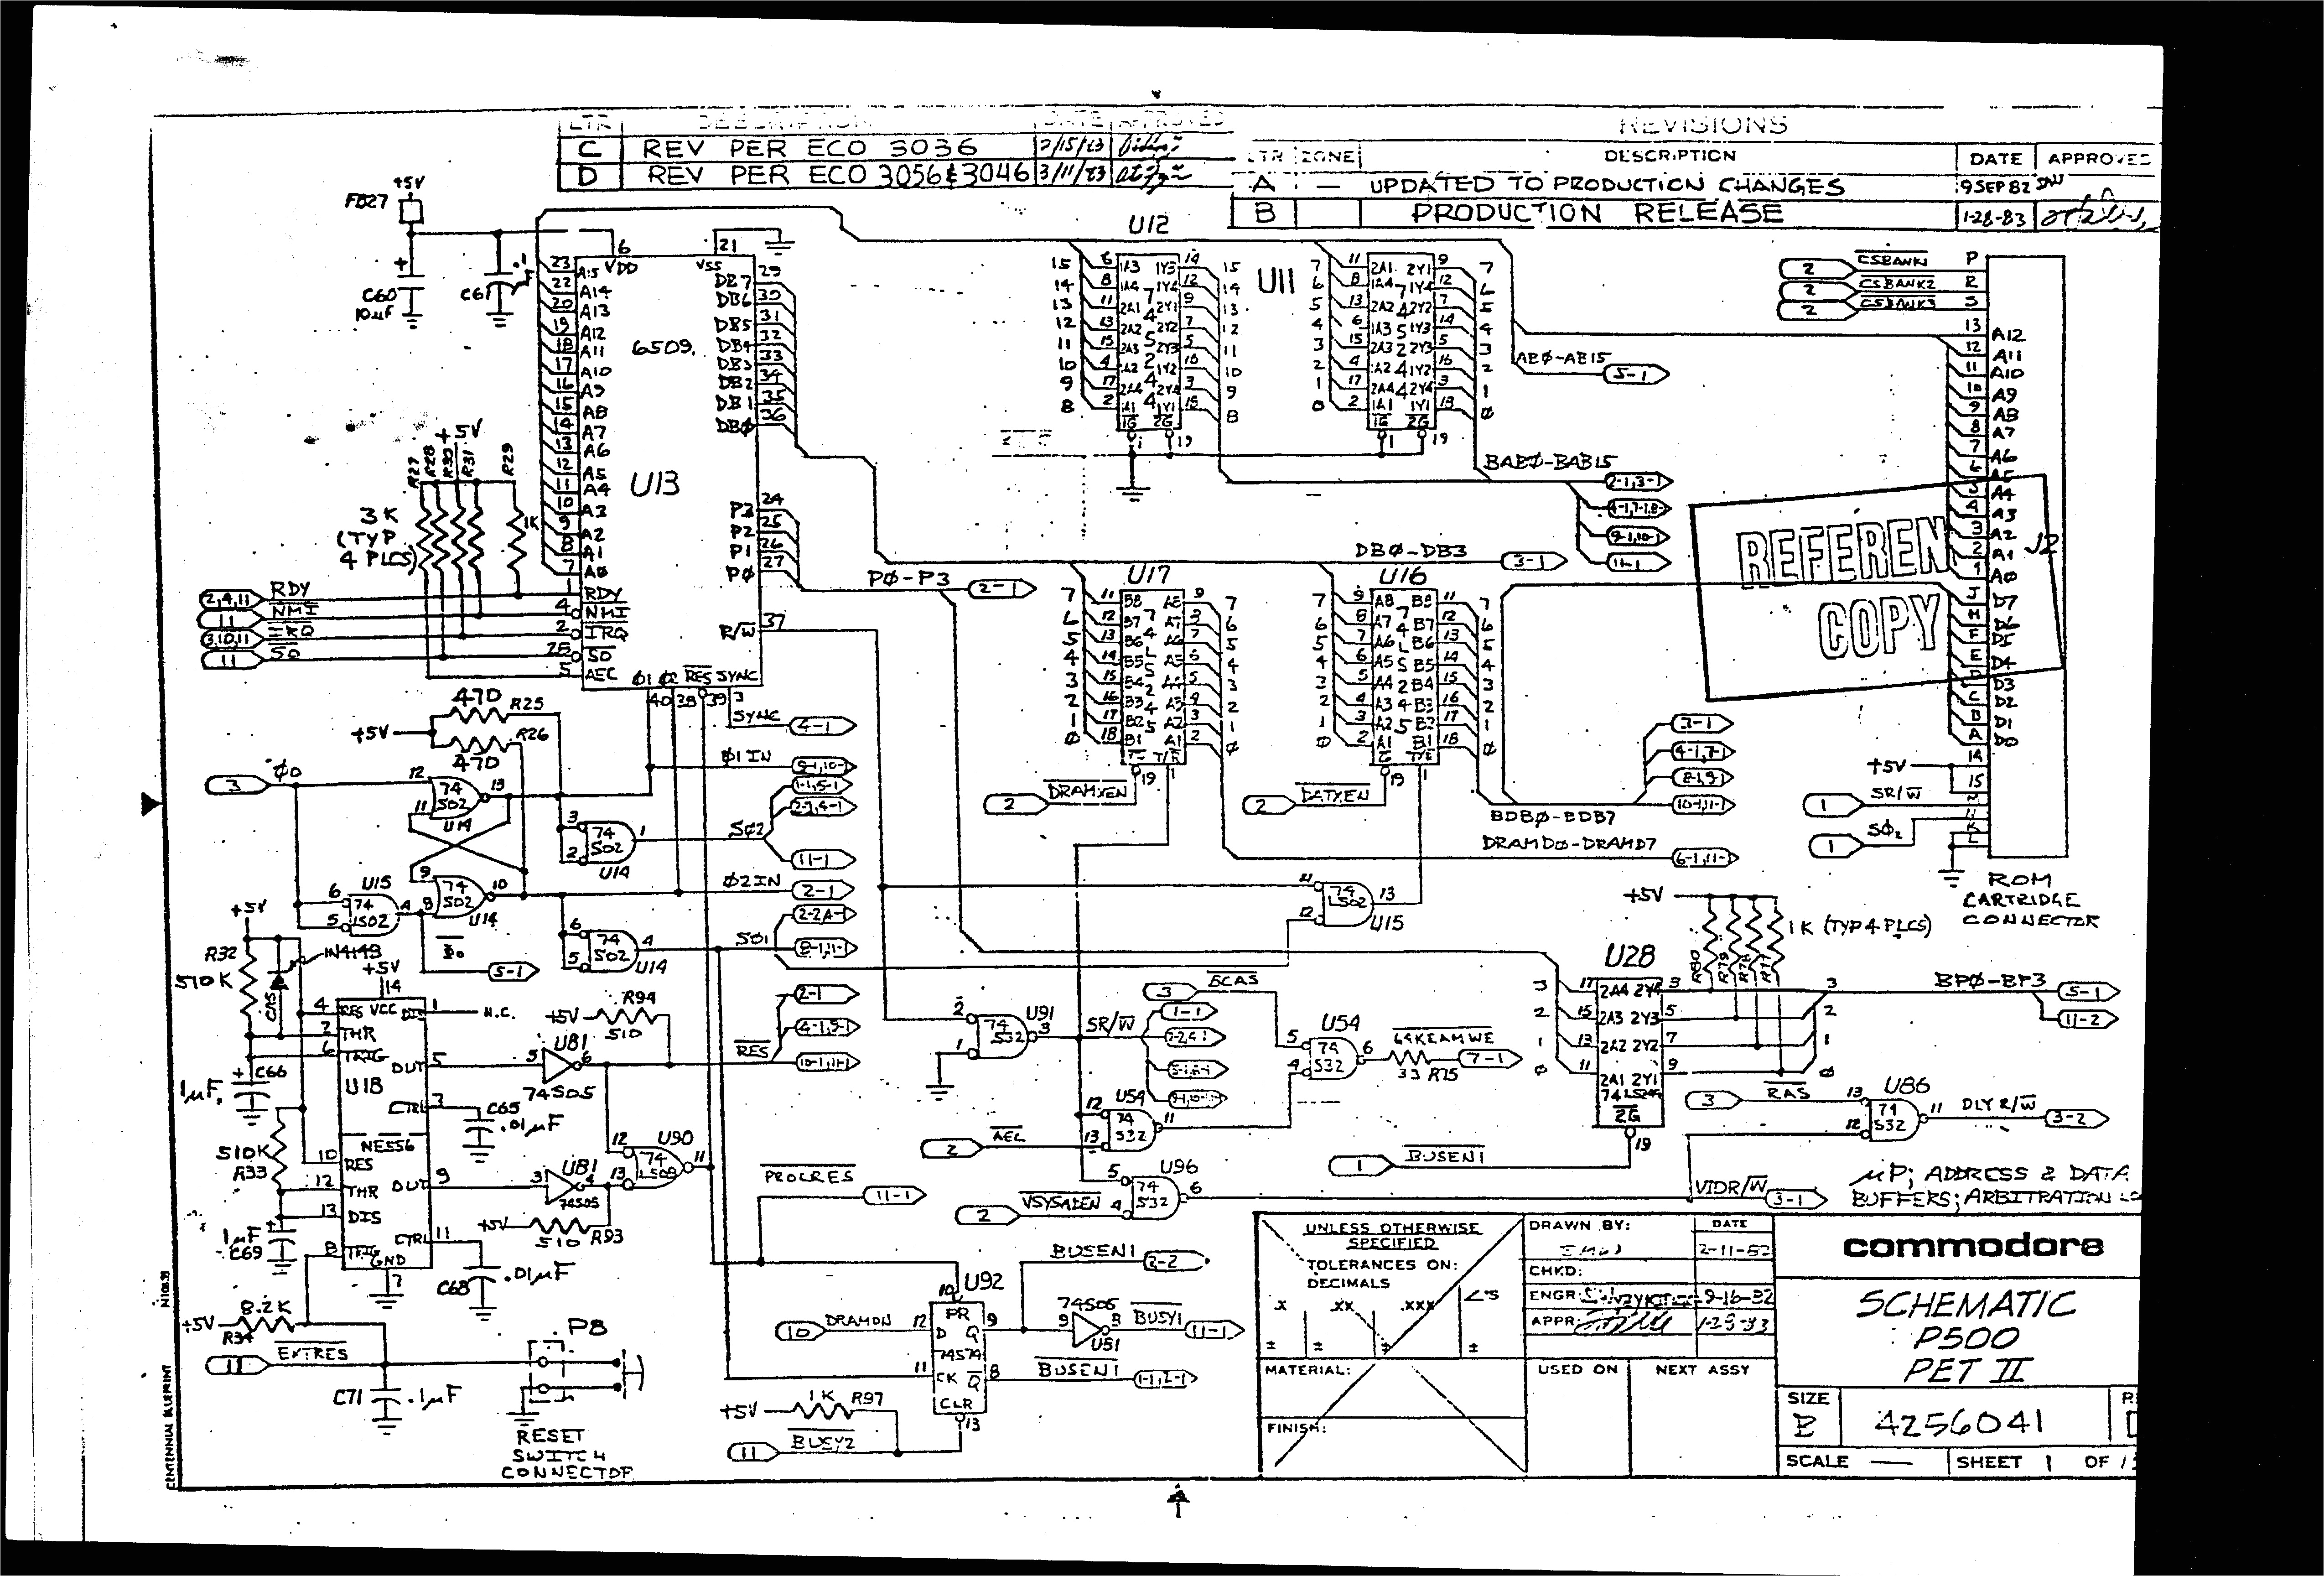 vr v8 auto wiring diagram wiring diagrams valuevr v8 auto wiring diagram wiring diagram fascinating vr